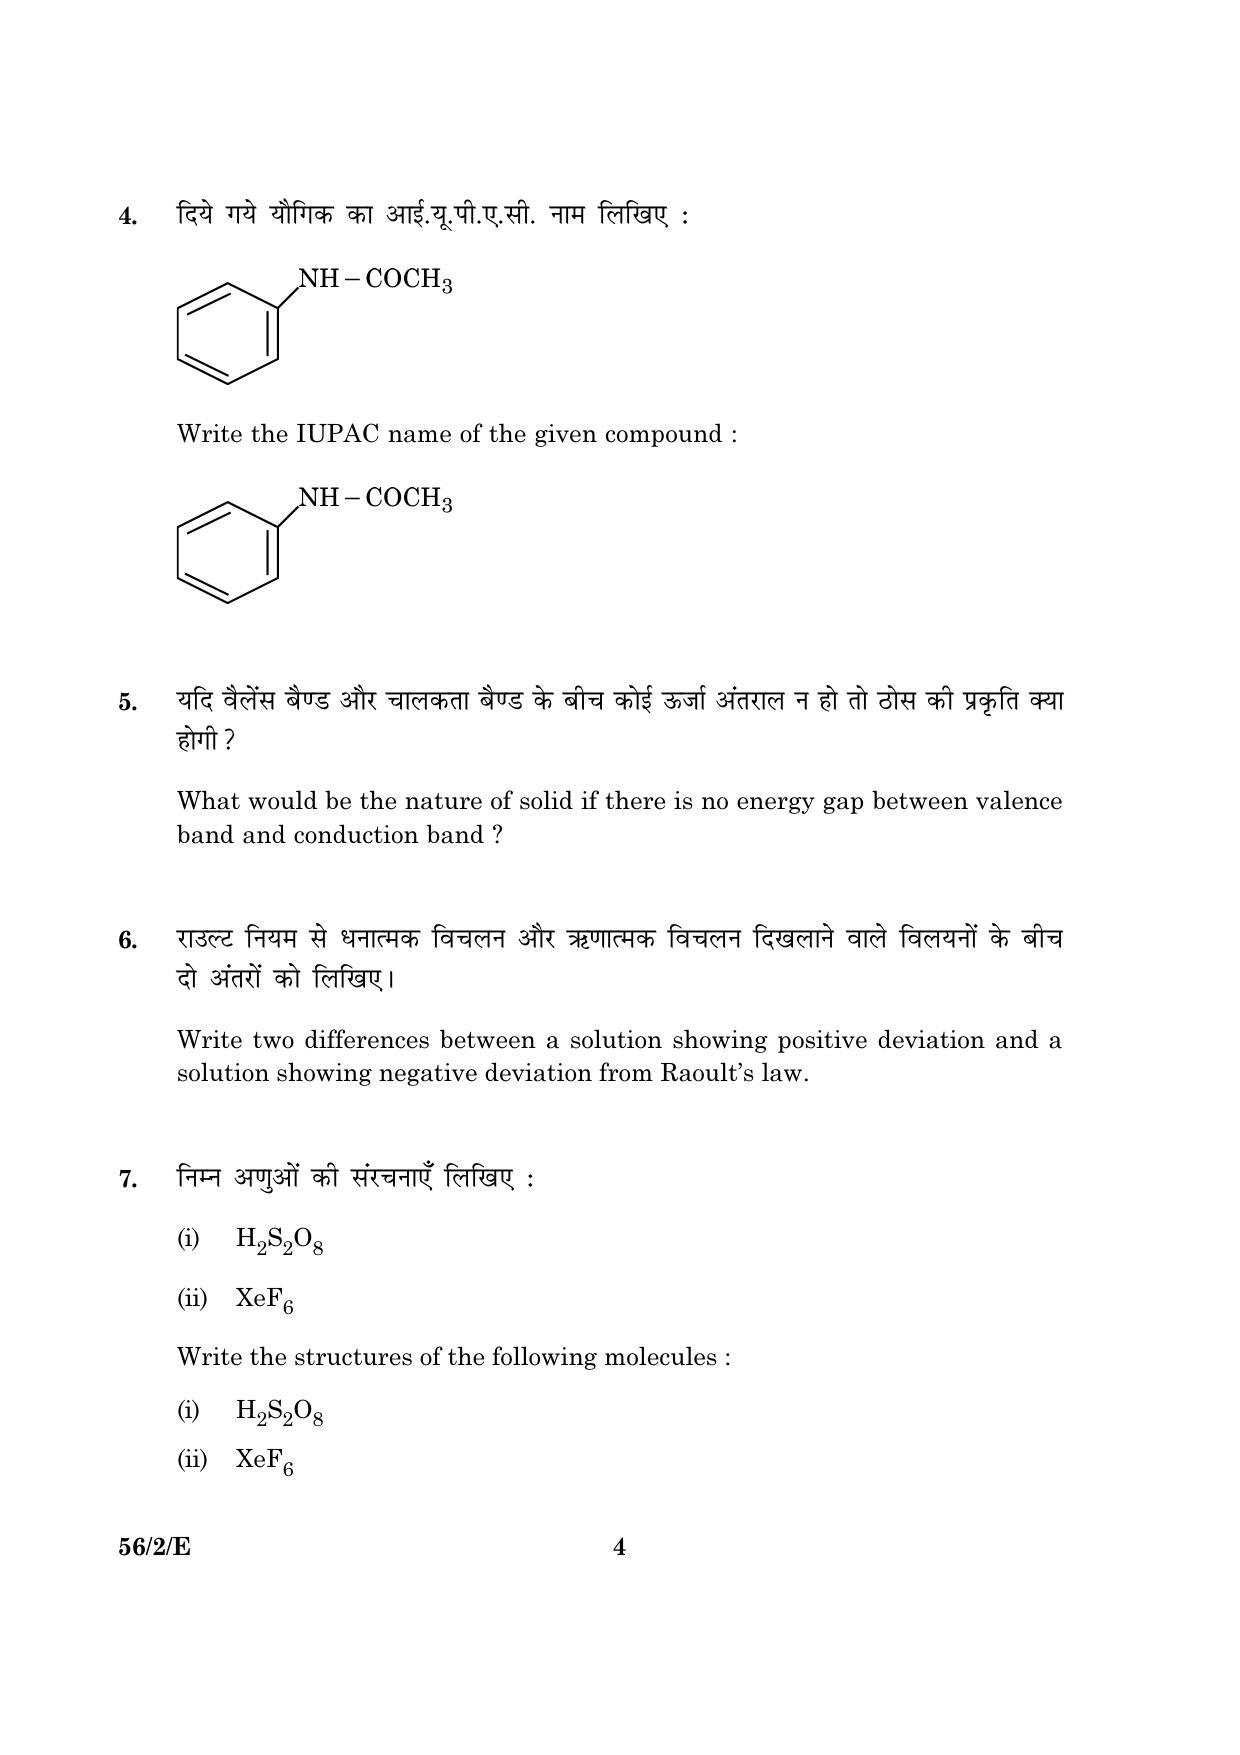 CBSE Class 12 056 Set 2 E Chemistry 2016 Question Paper - Page 4